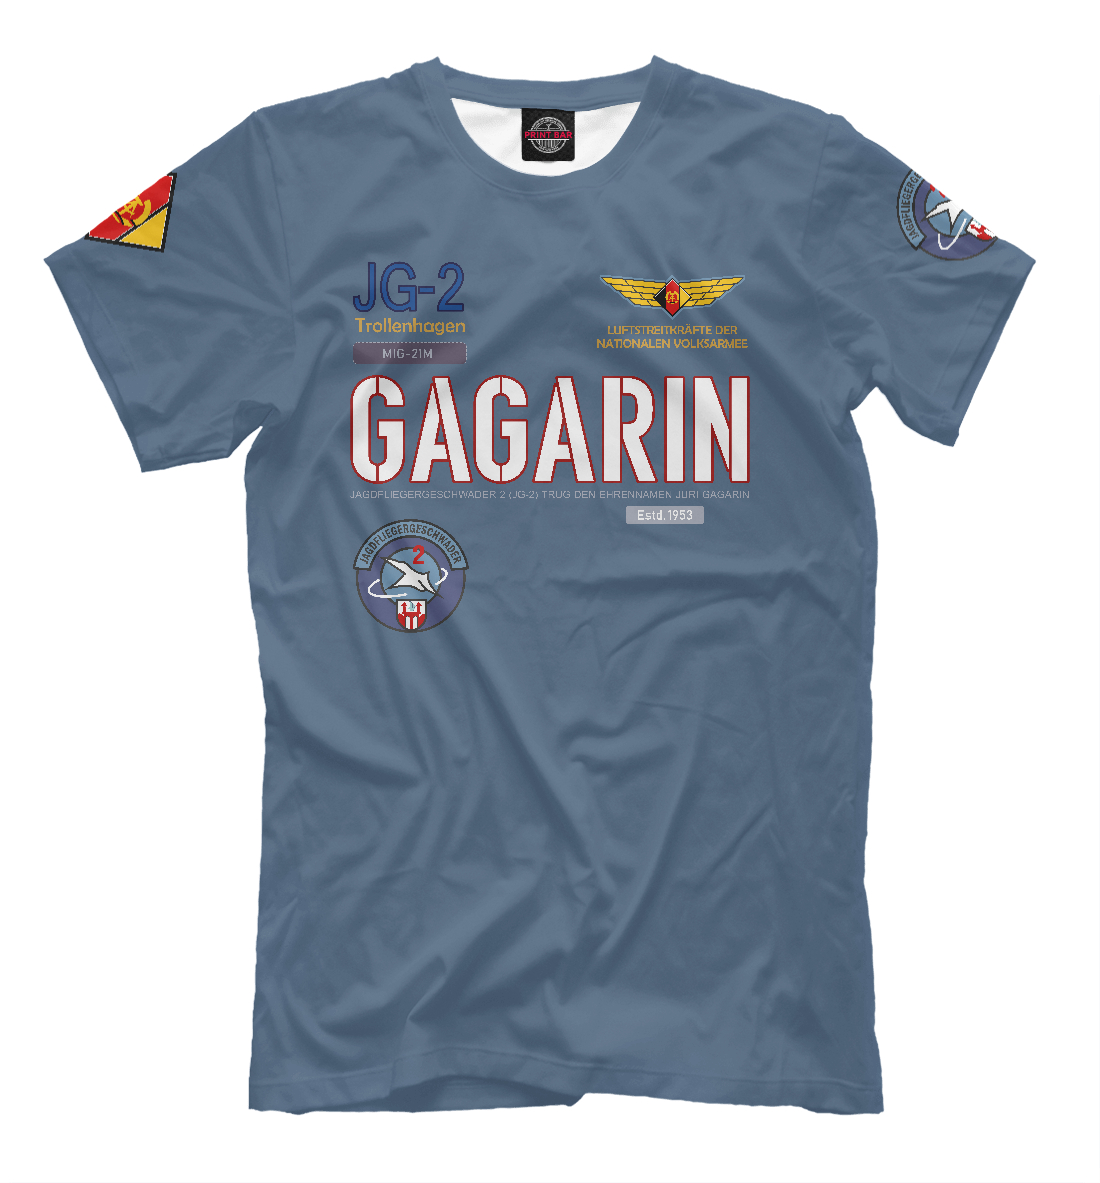 Футболка ВВС ГДР Эскадрилья Гагарин для мужчин, артикул: VVS-481647-fut-2mp